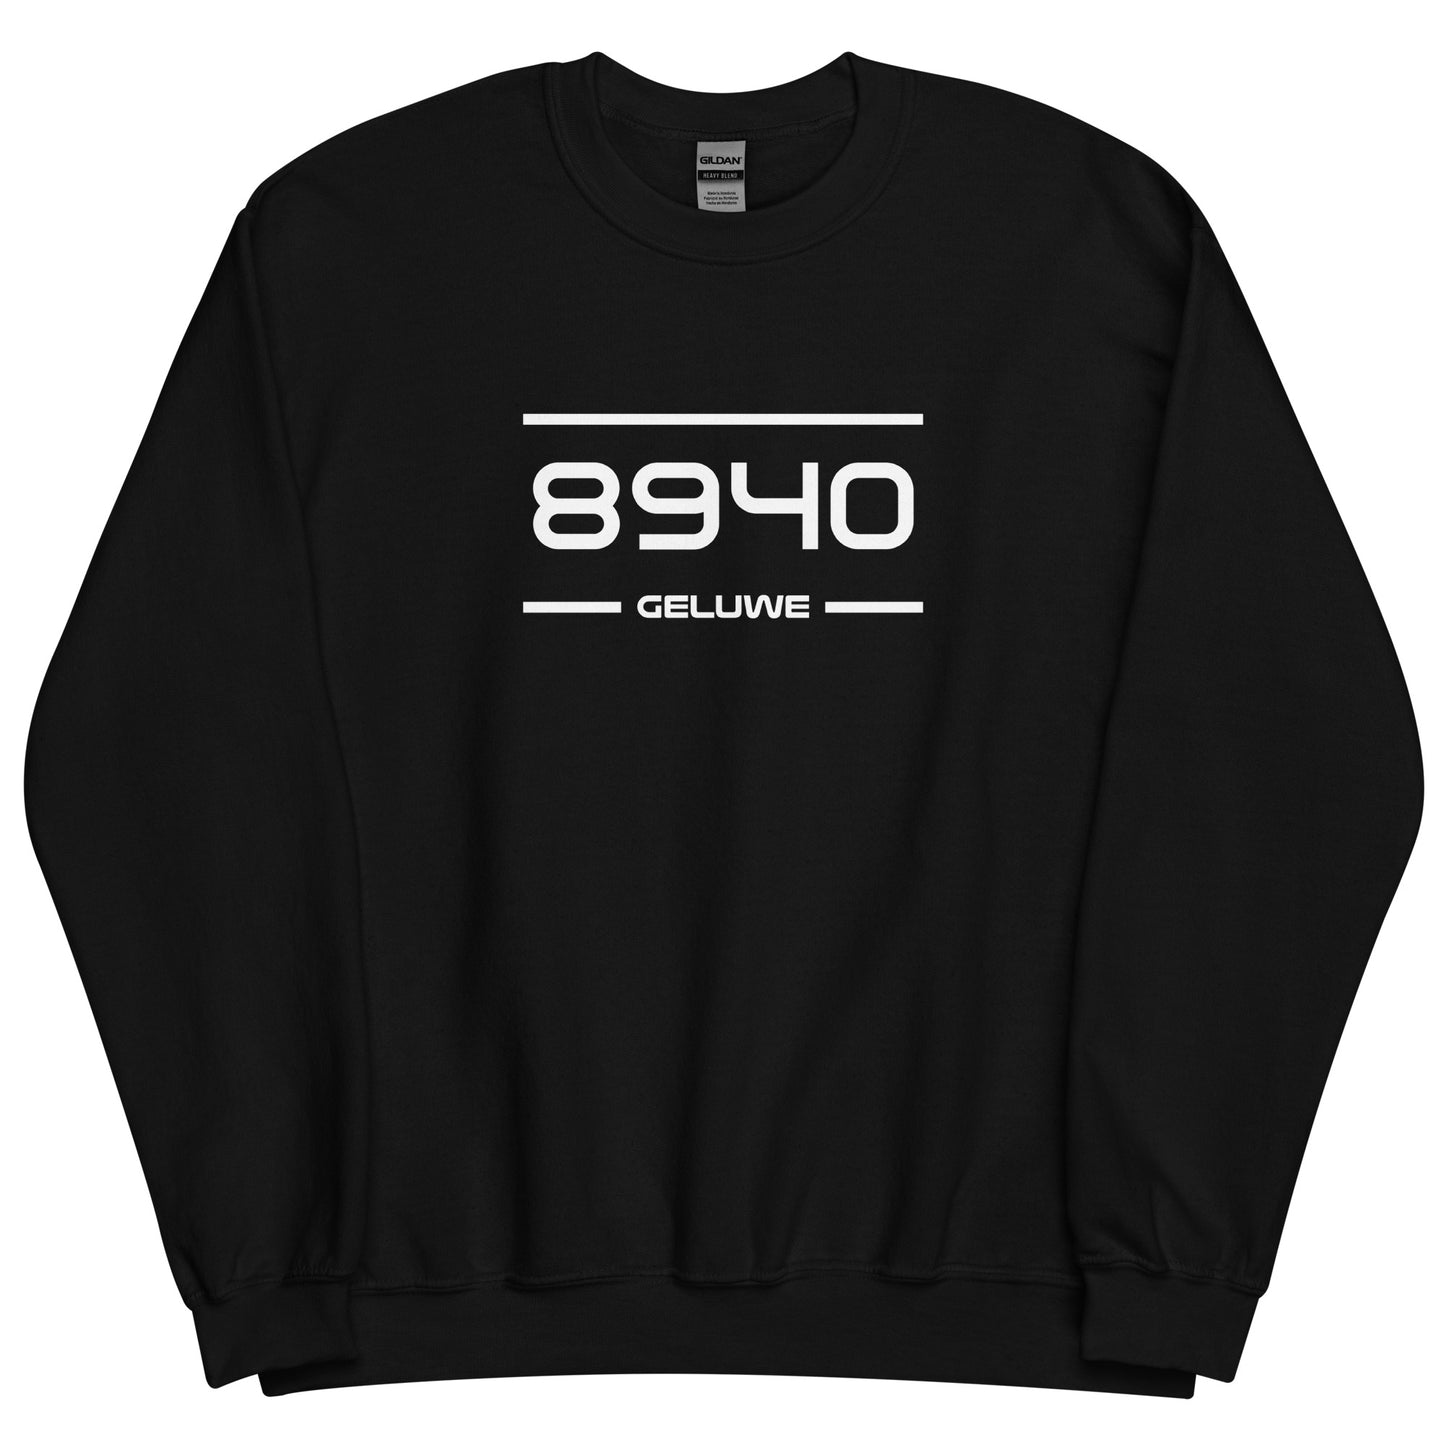 Sweater - 8940 - Geluwe (M/V)